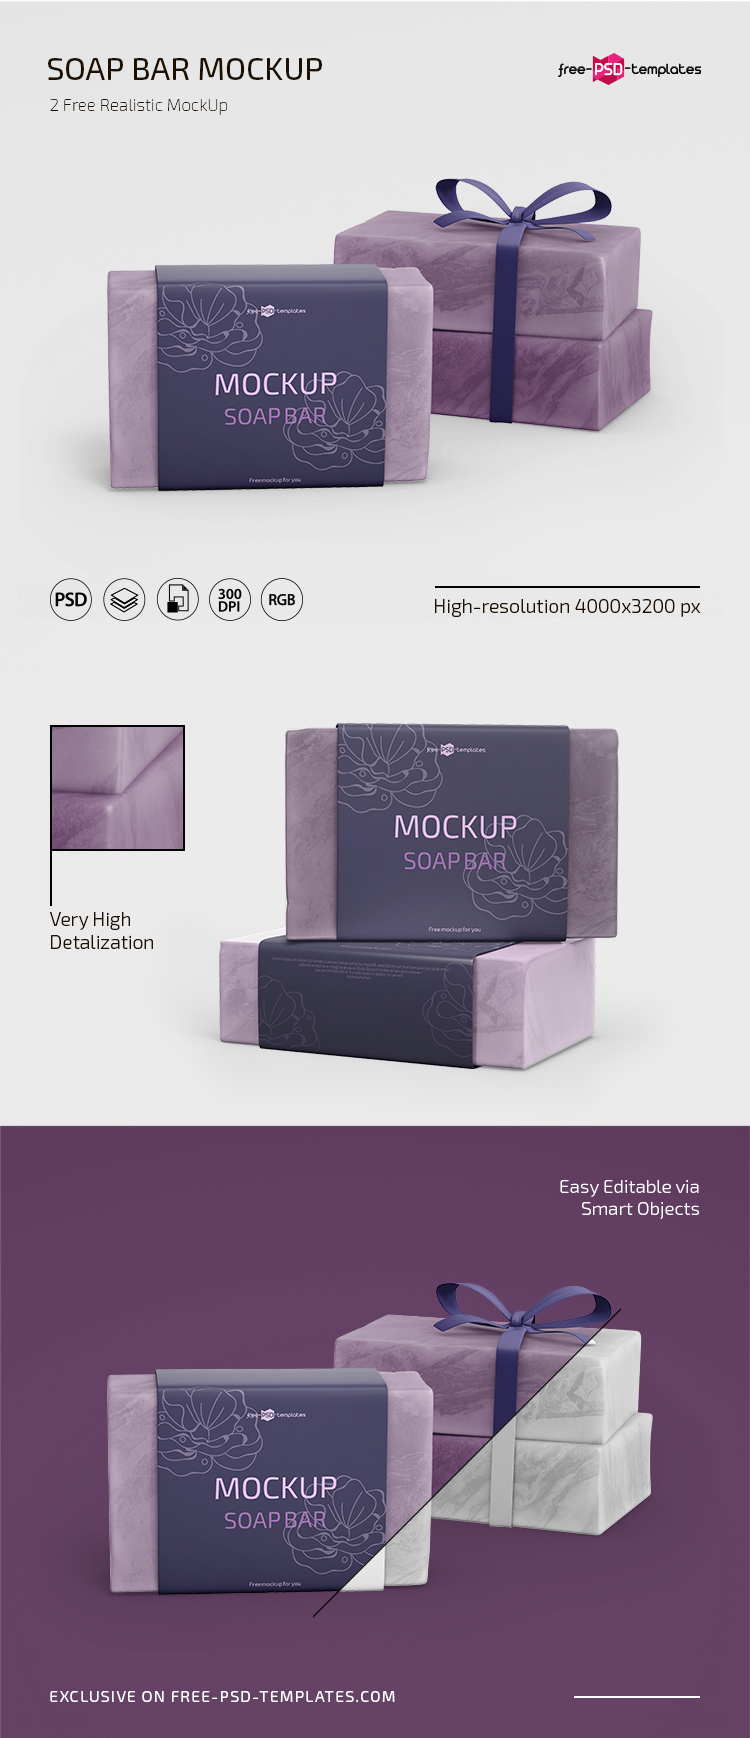 Download Free PSD Soap Bar Mockup Template | Free PSD Templates